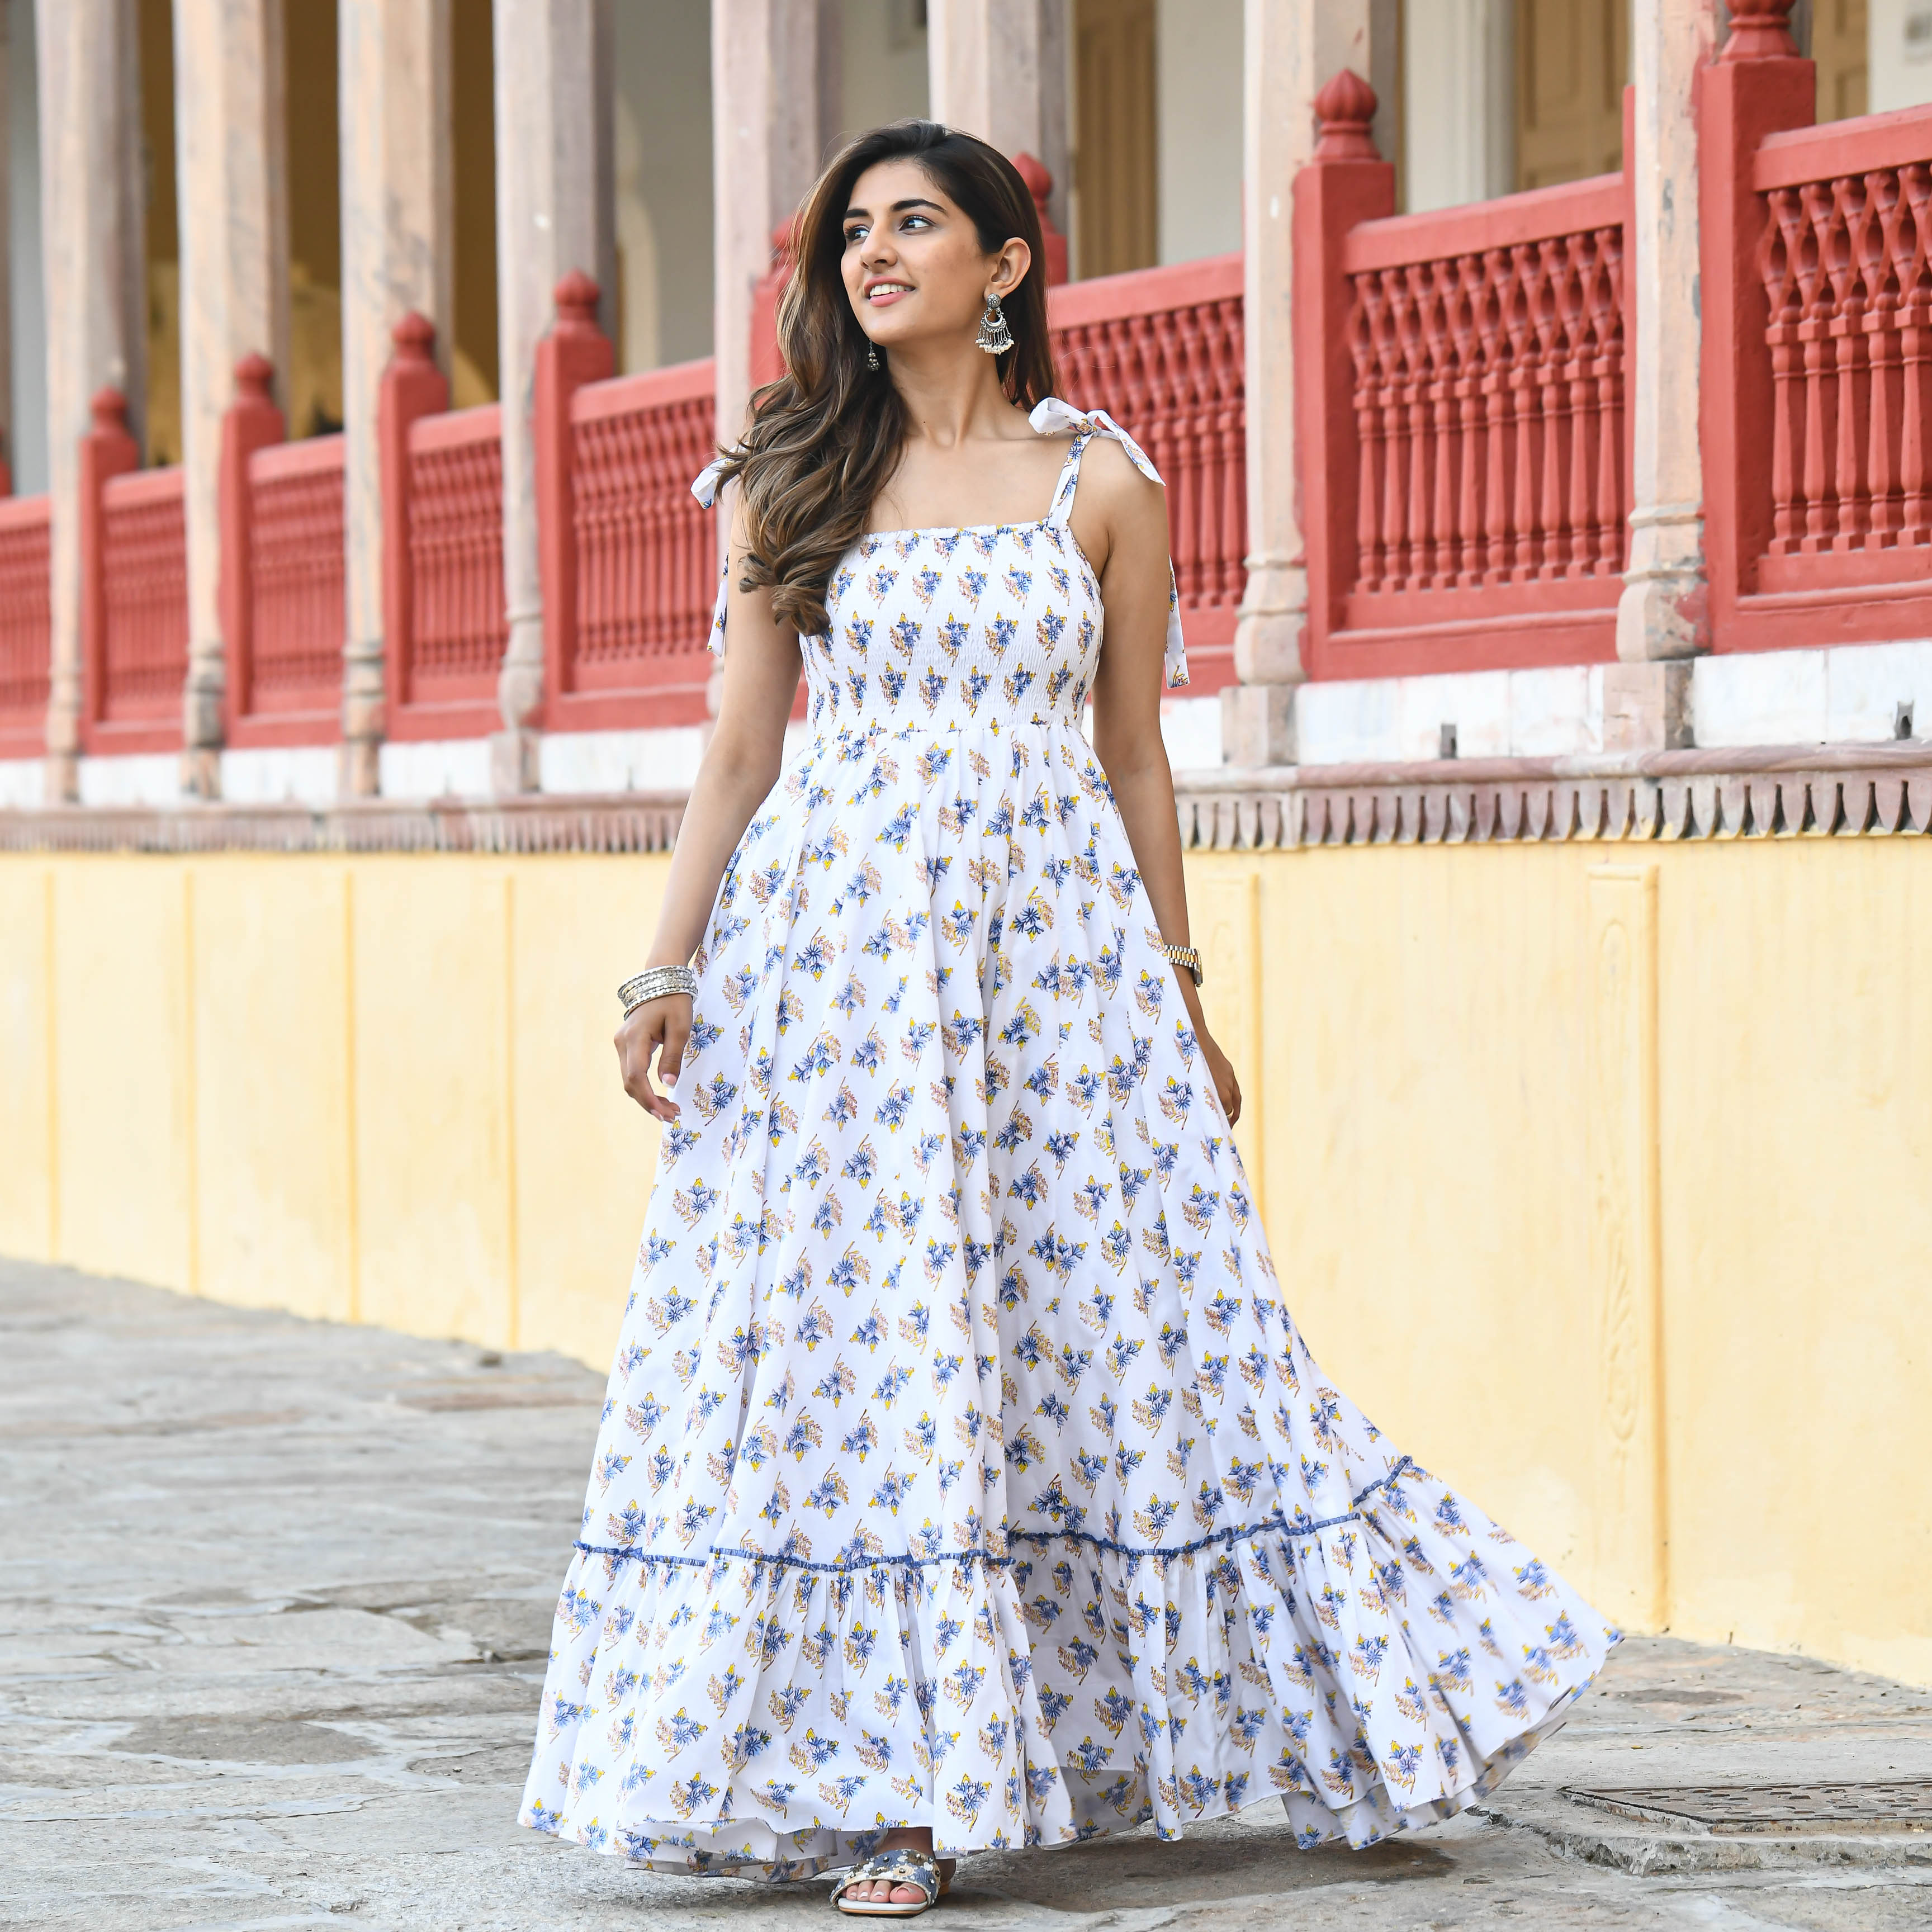 Dresses for Woman 2020 | Mango Singapore | Pretty spring dresses, Spring  dresses, Trending dresses